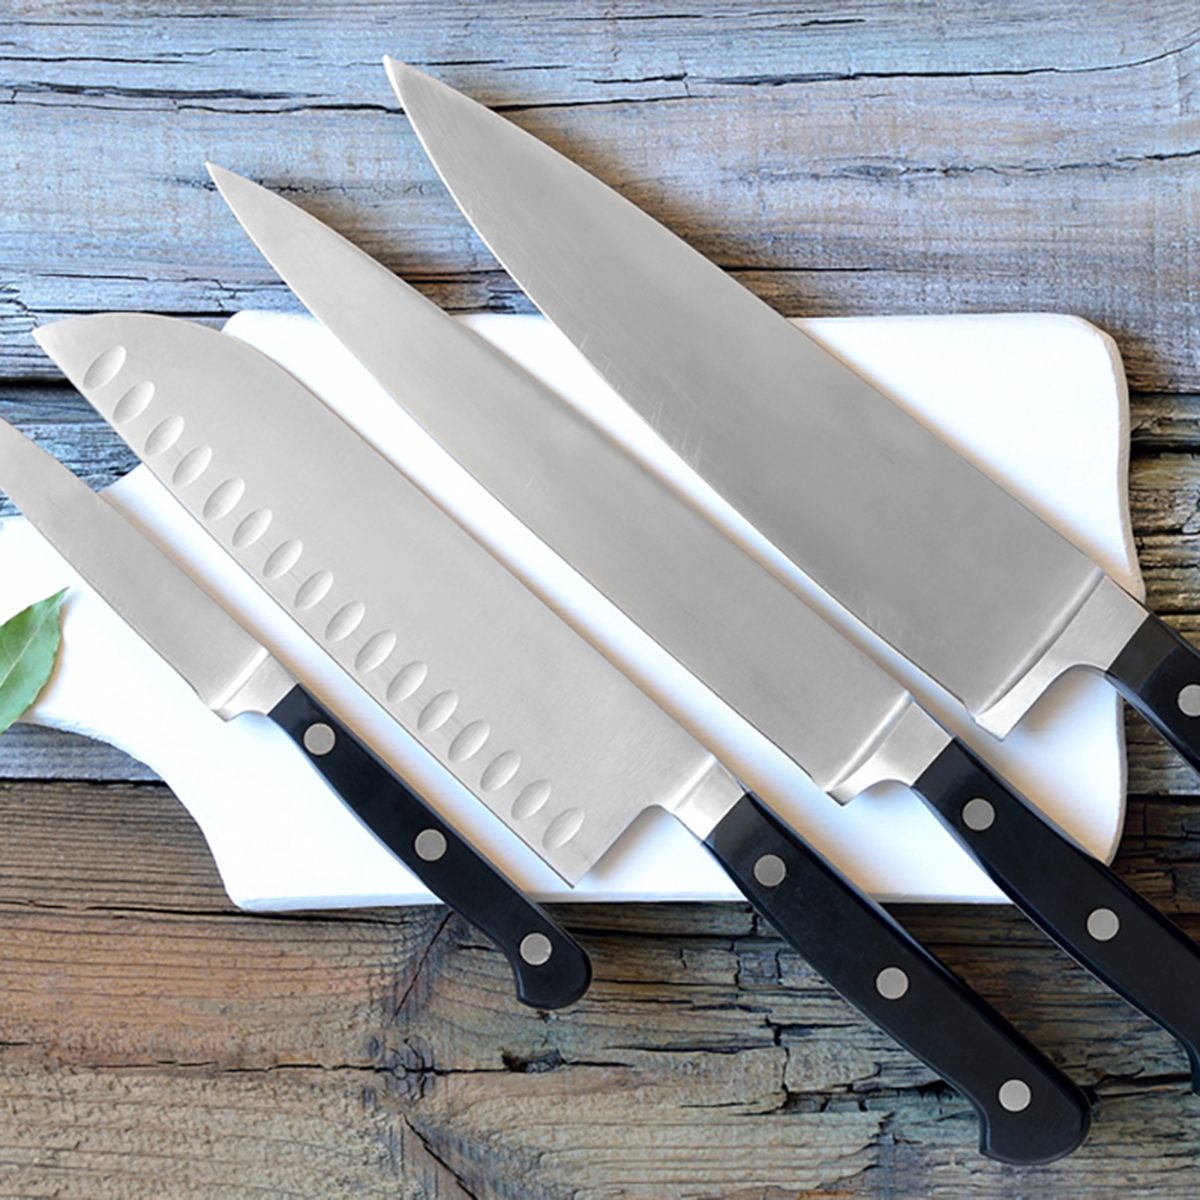 Set of kitchen knives on a board